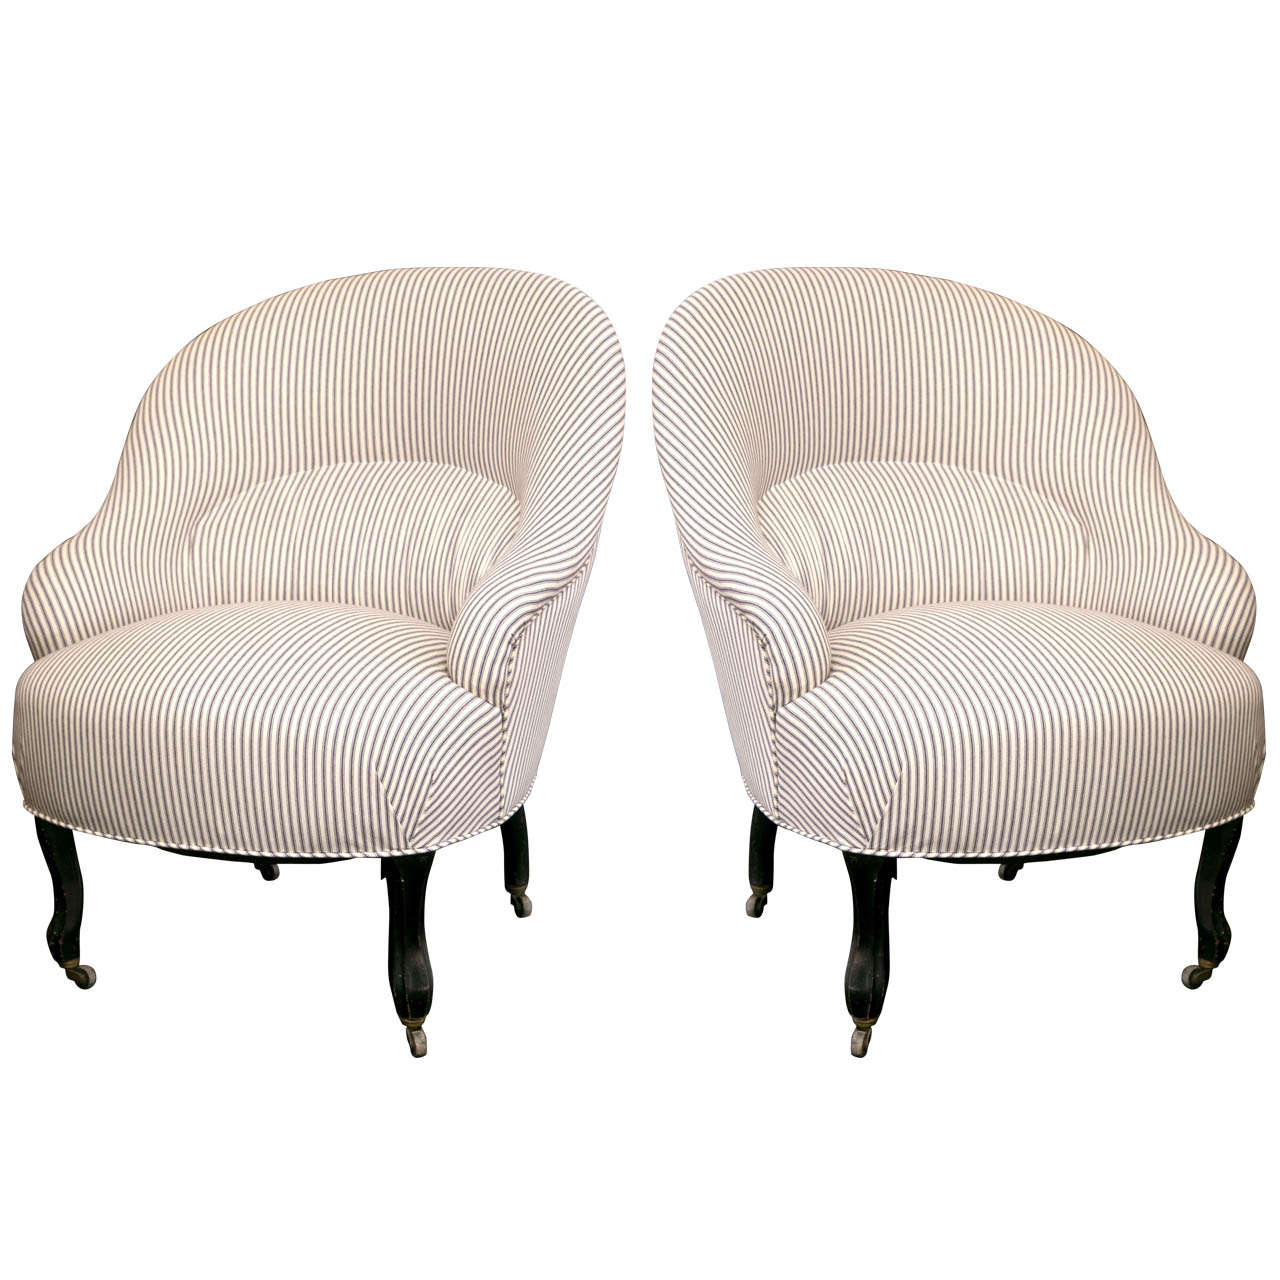 Pair of Napoleon III Chairs